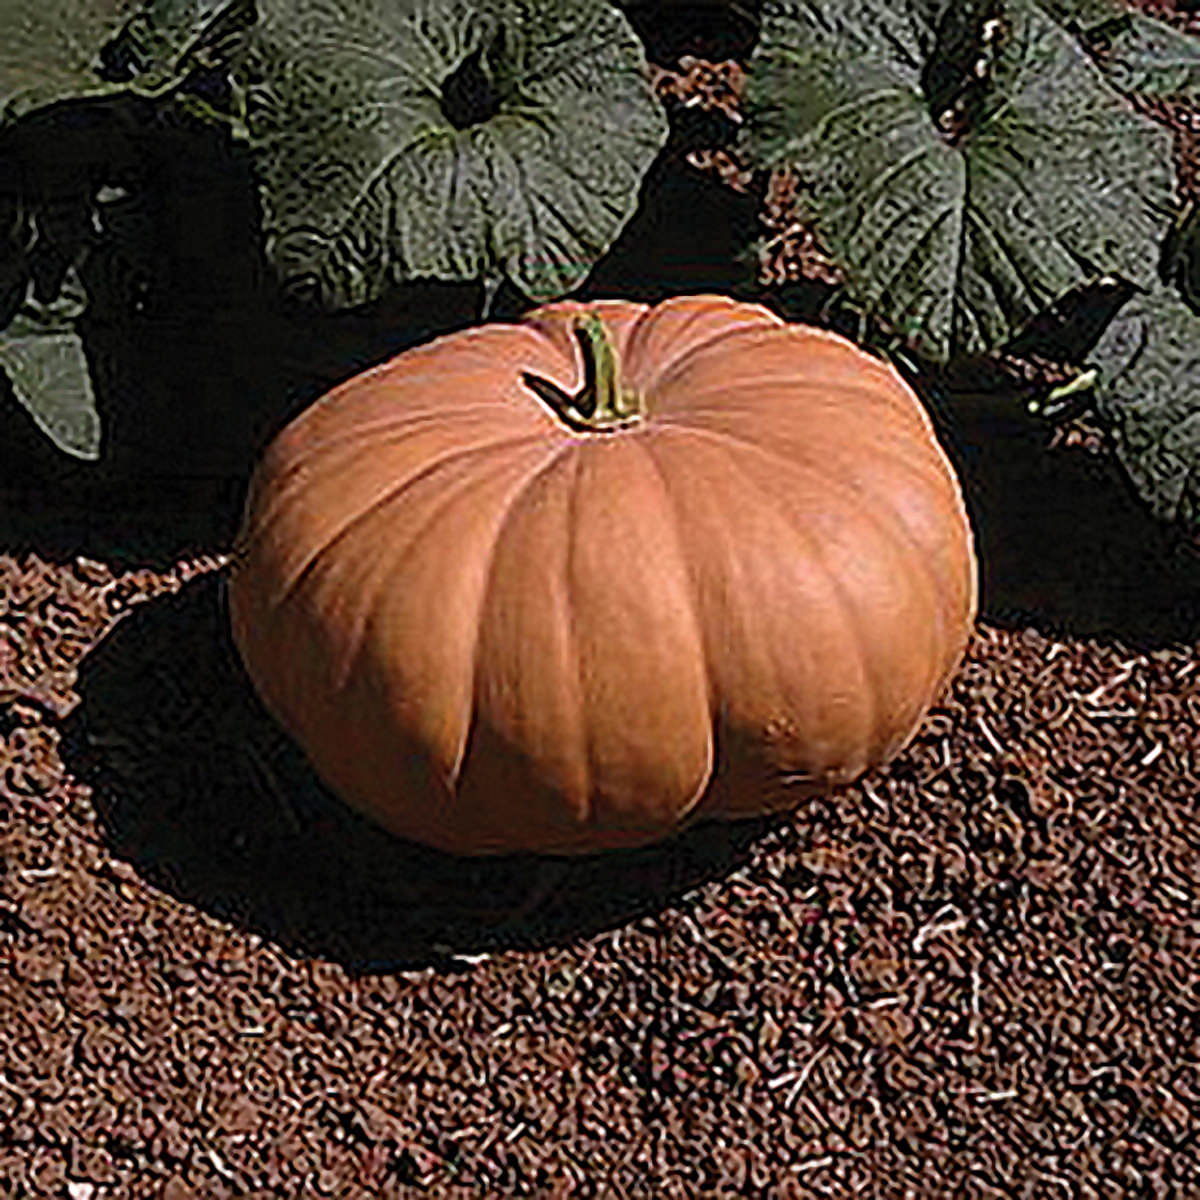 Autumn Buckskin F1 Hybrid Pumpkin Seeds